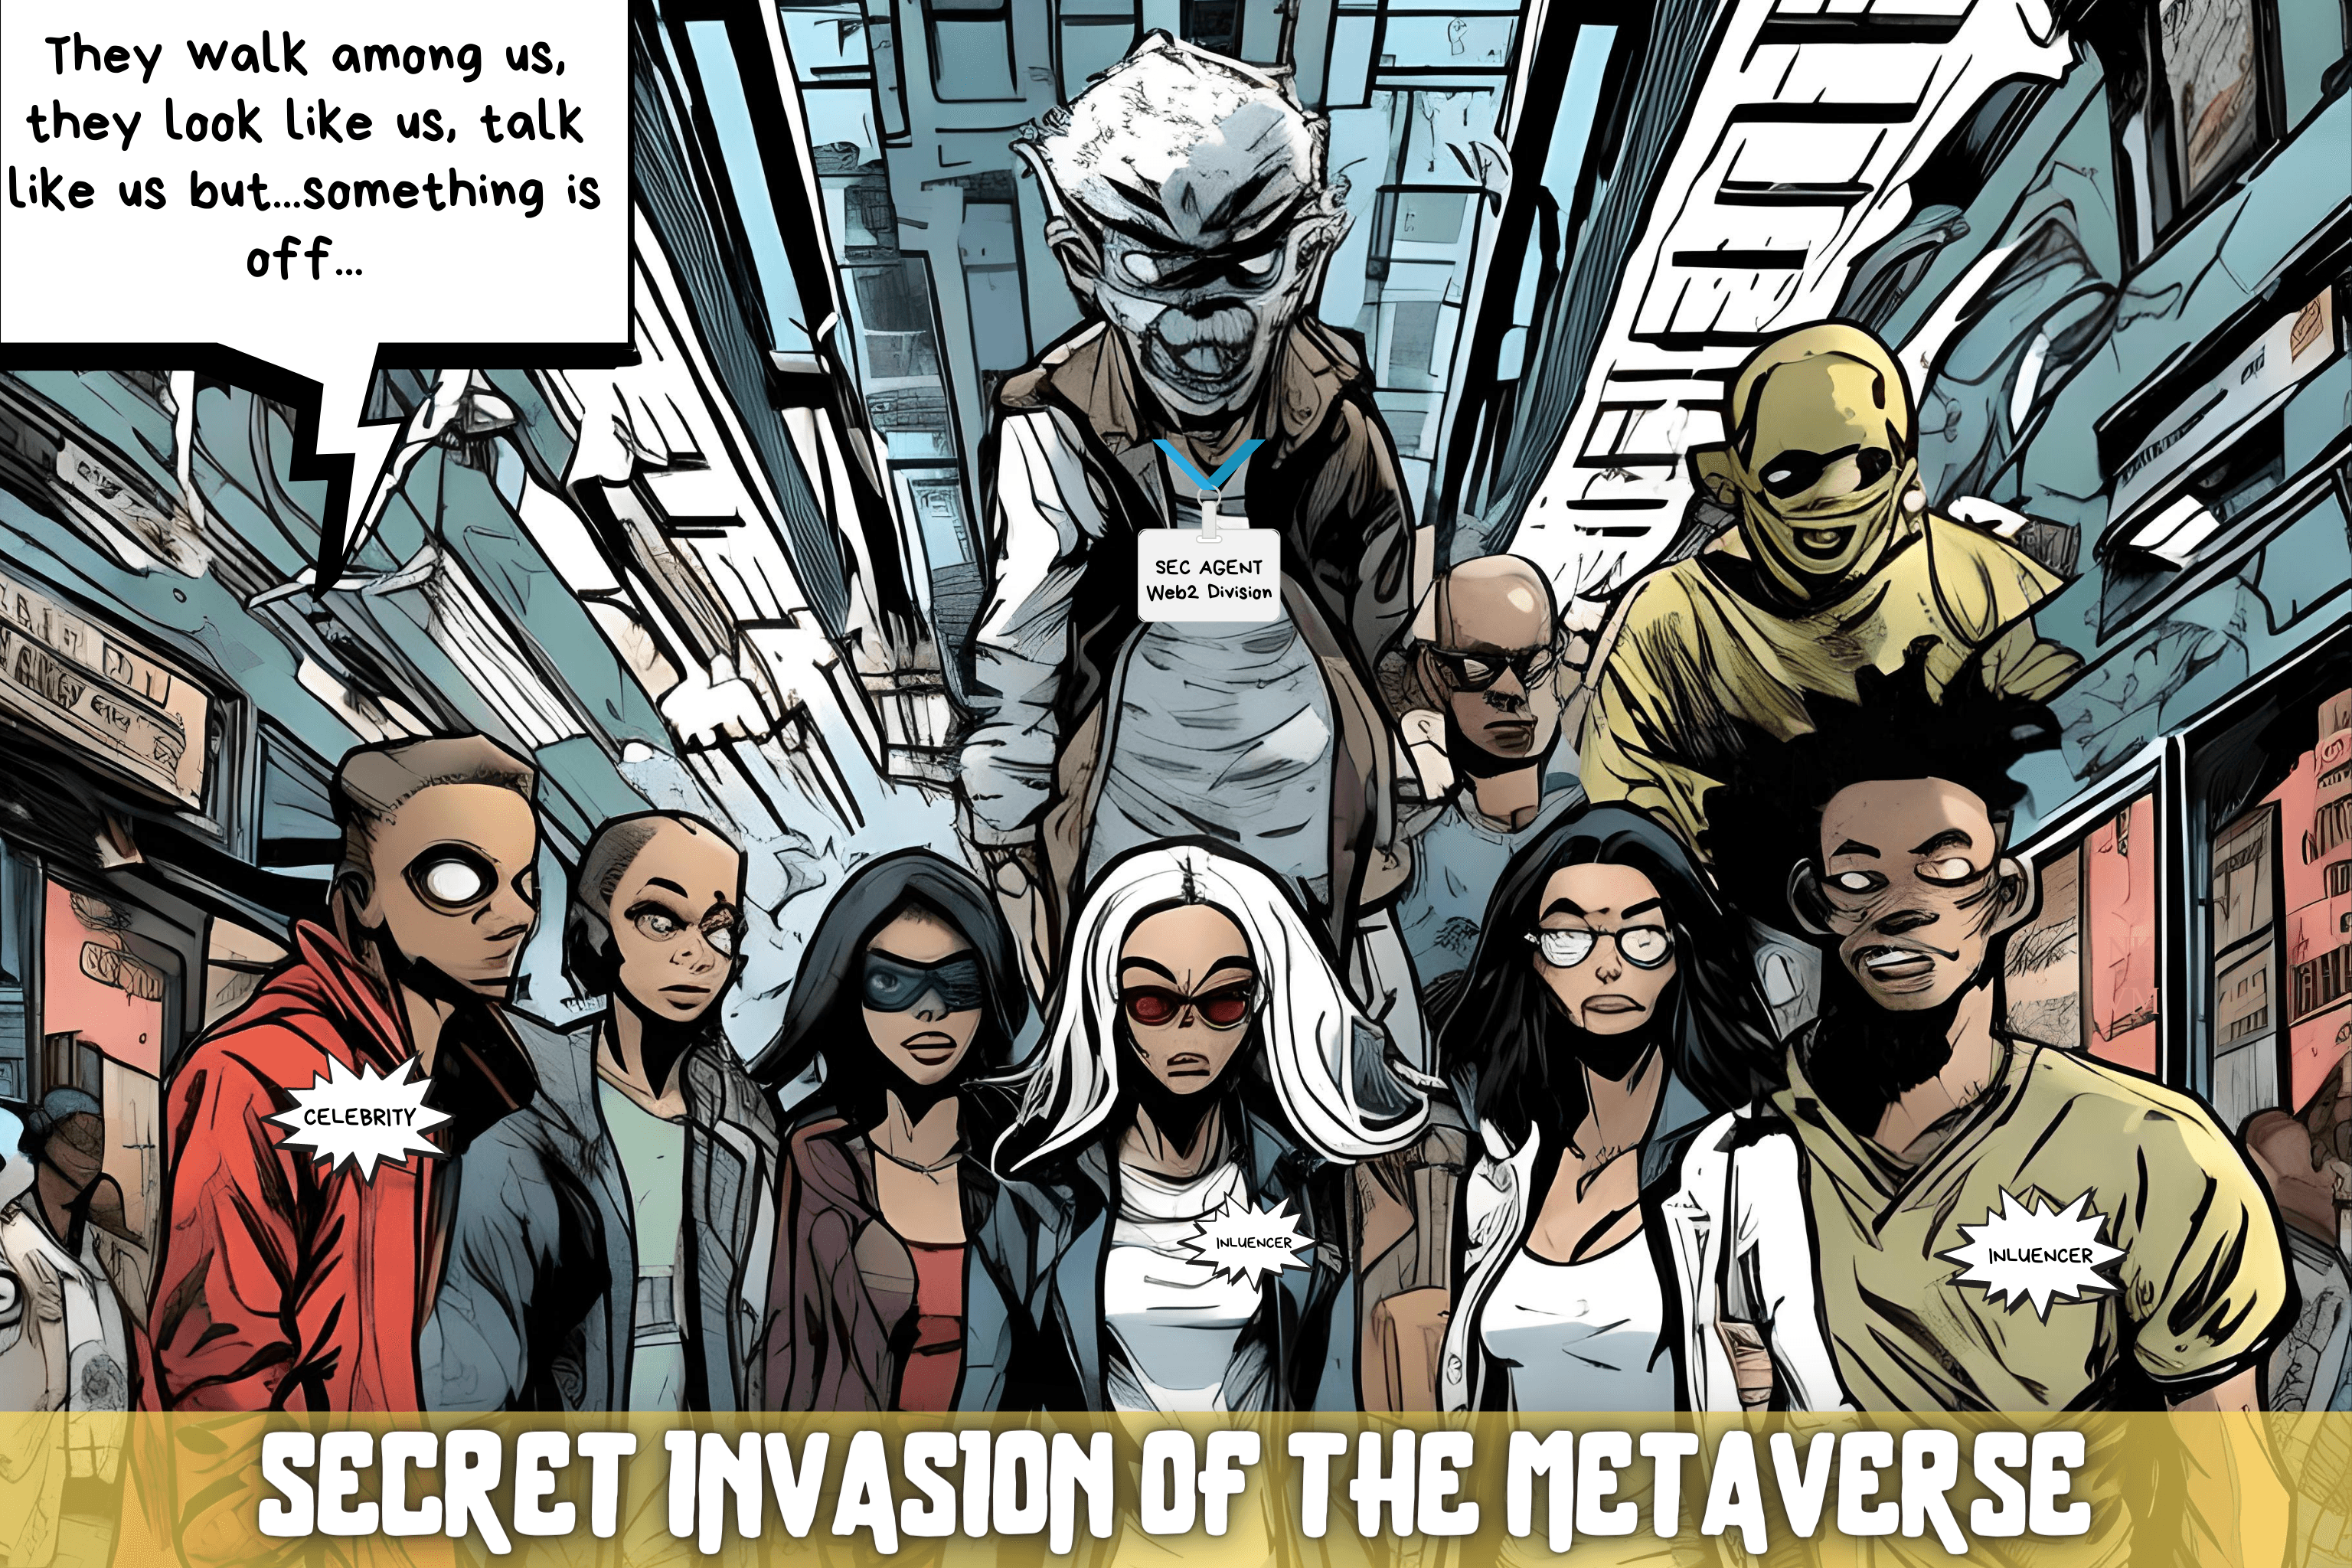 Day 28 | Secret Invasion of the Metaverse #30DaysOfMetaverse